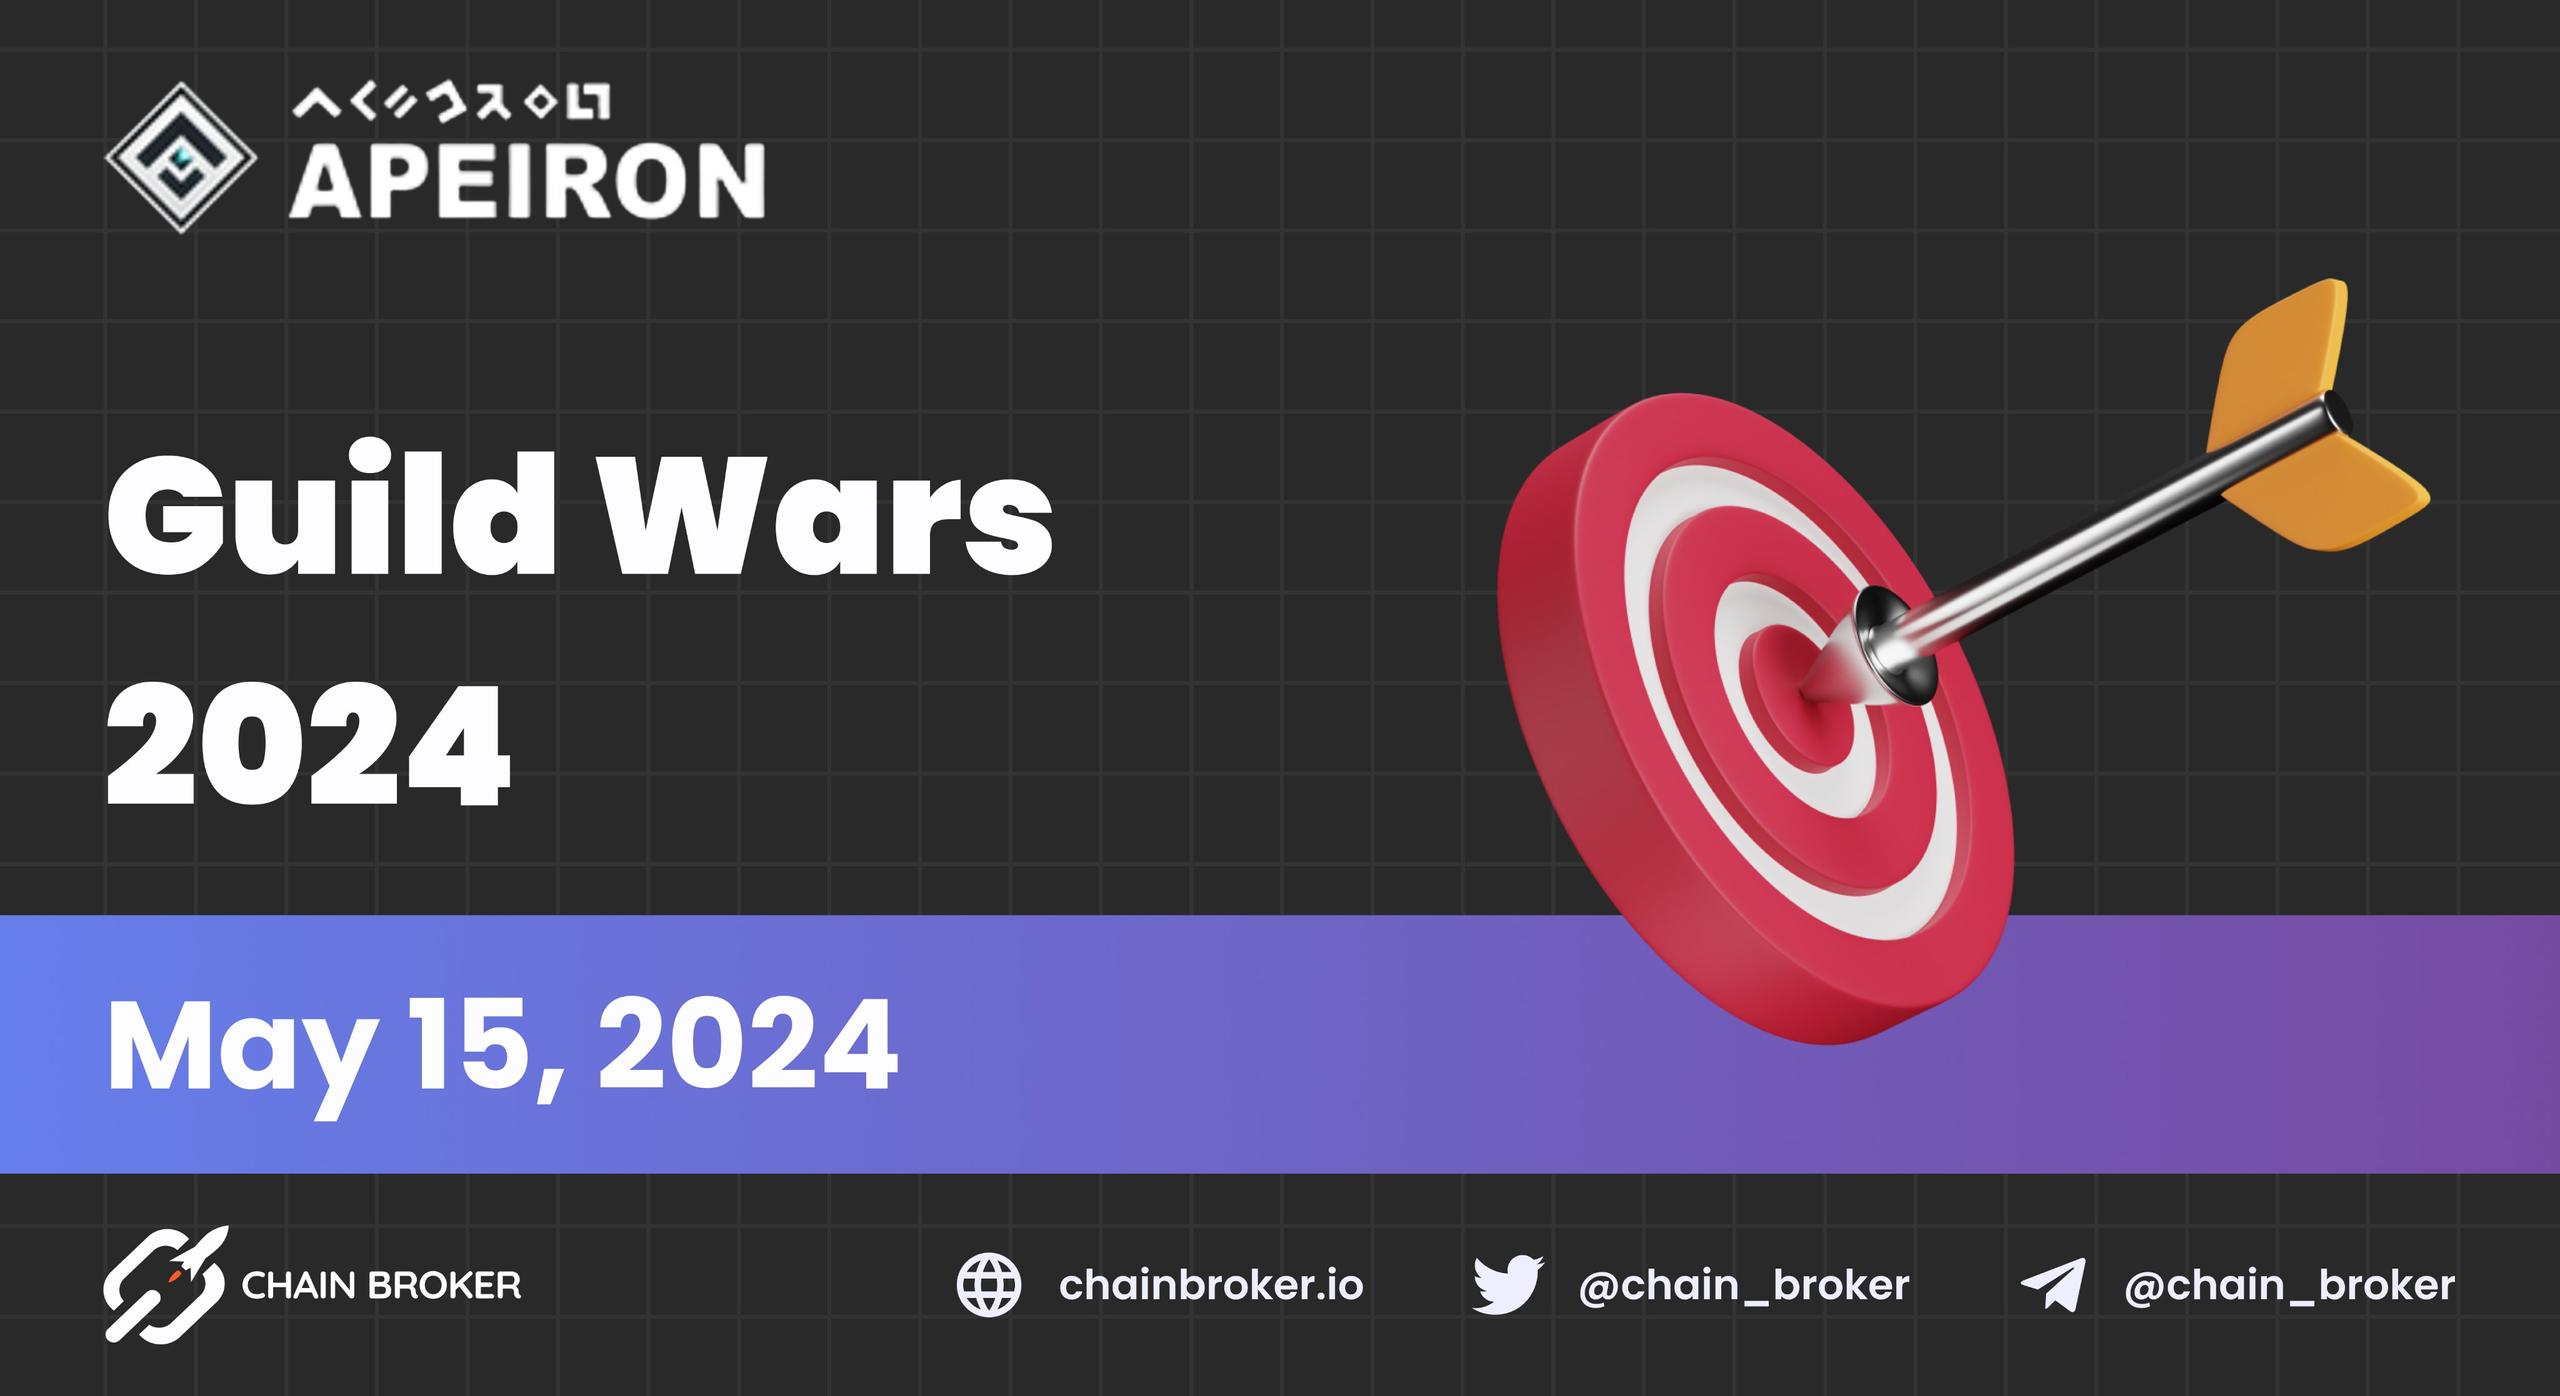 Apeiron Presents Guild Wars 2024